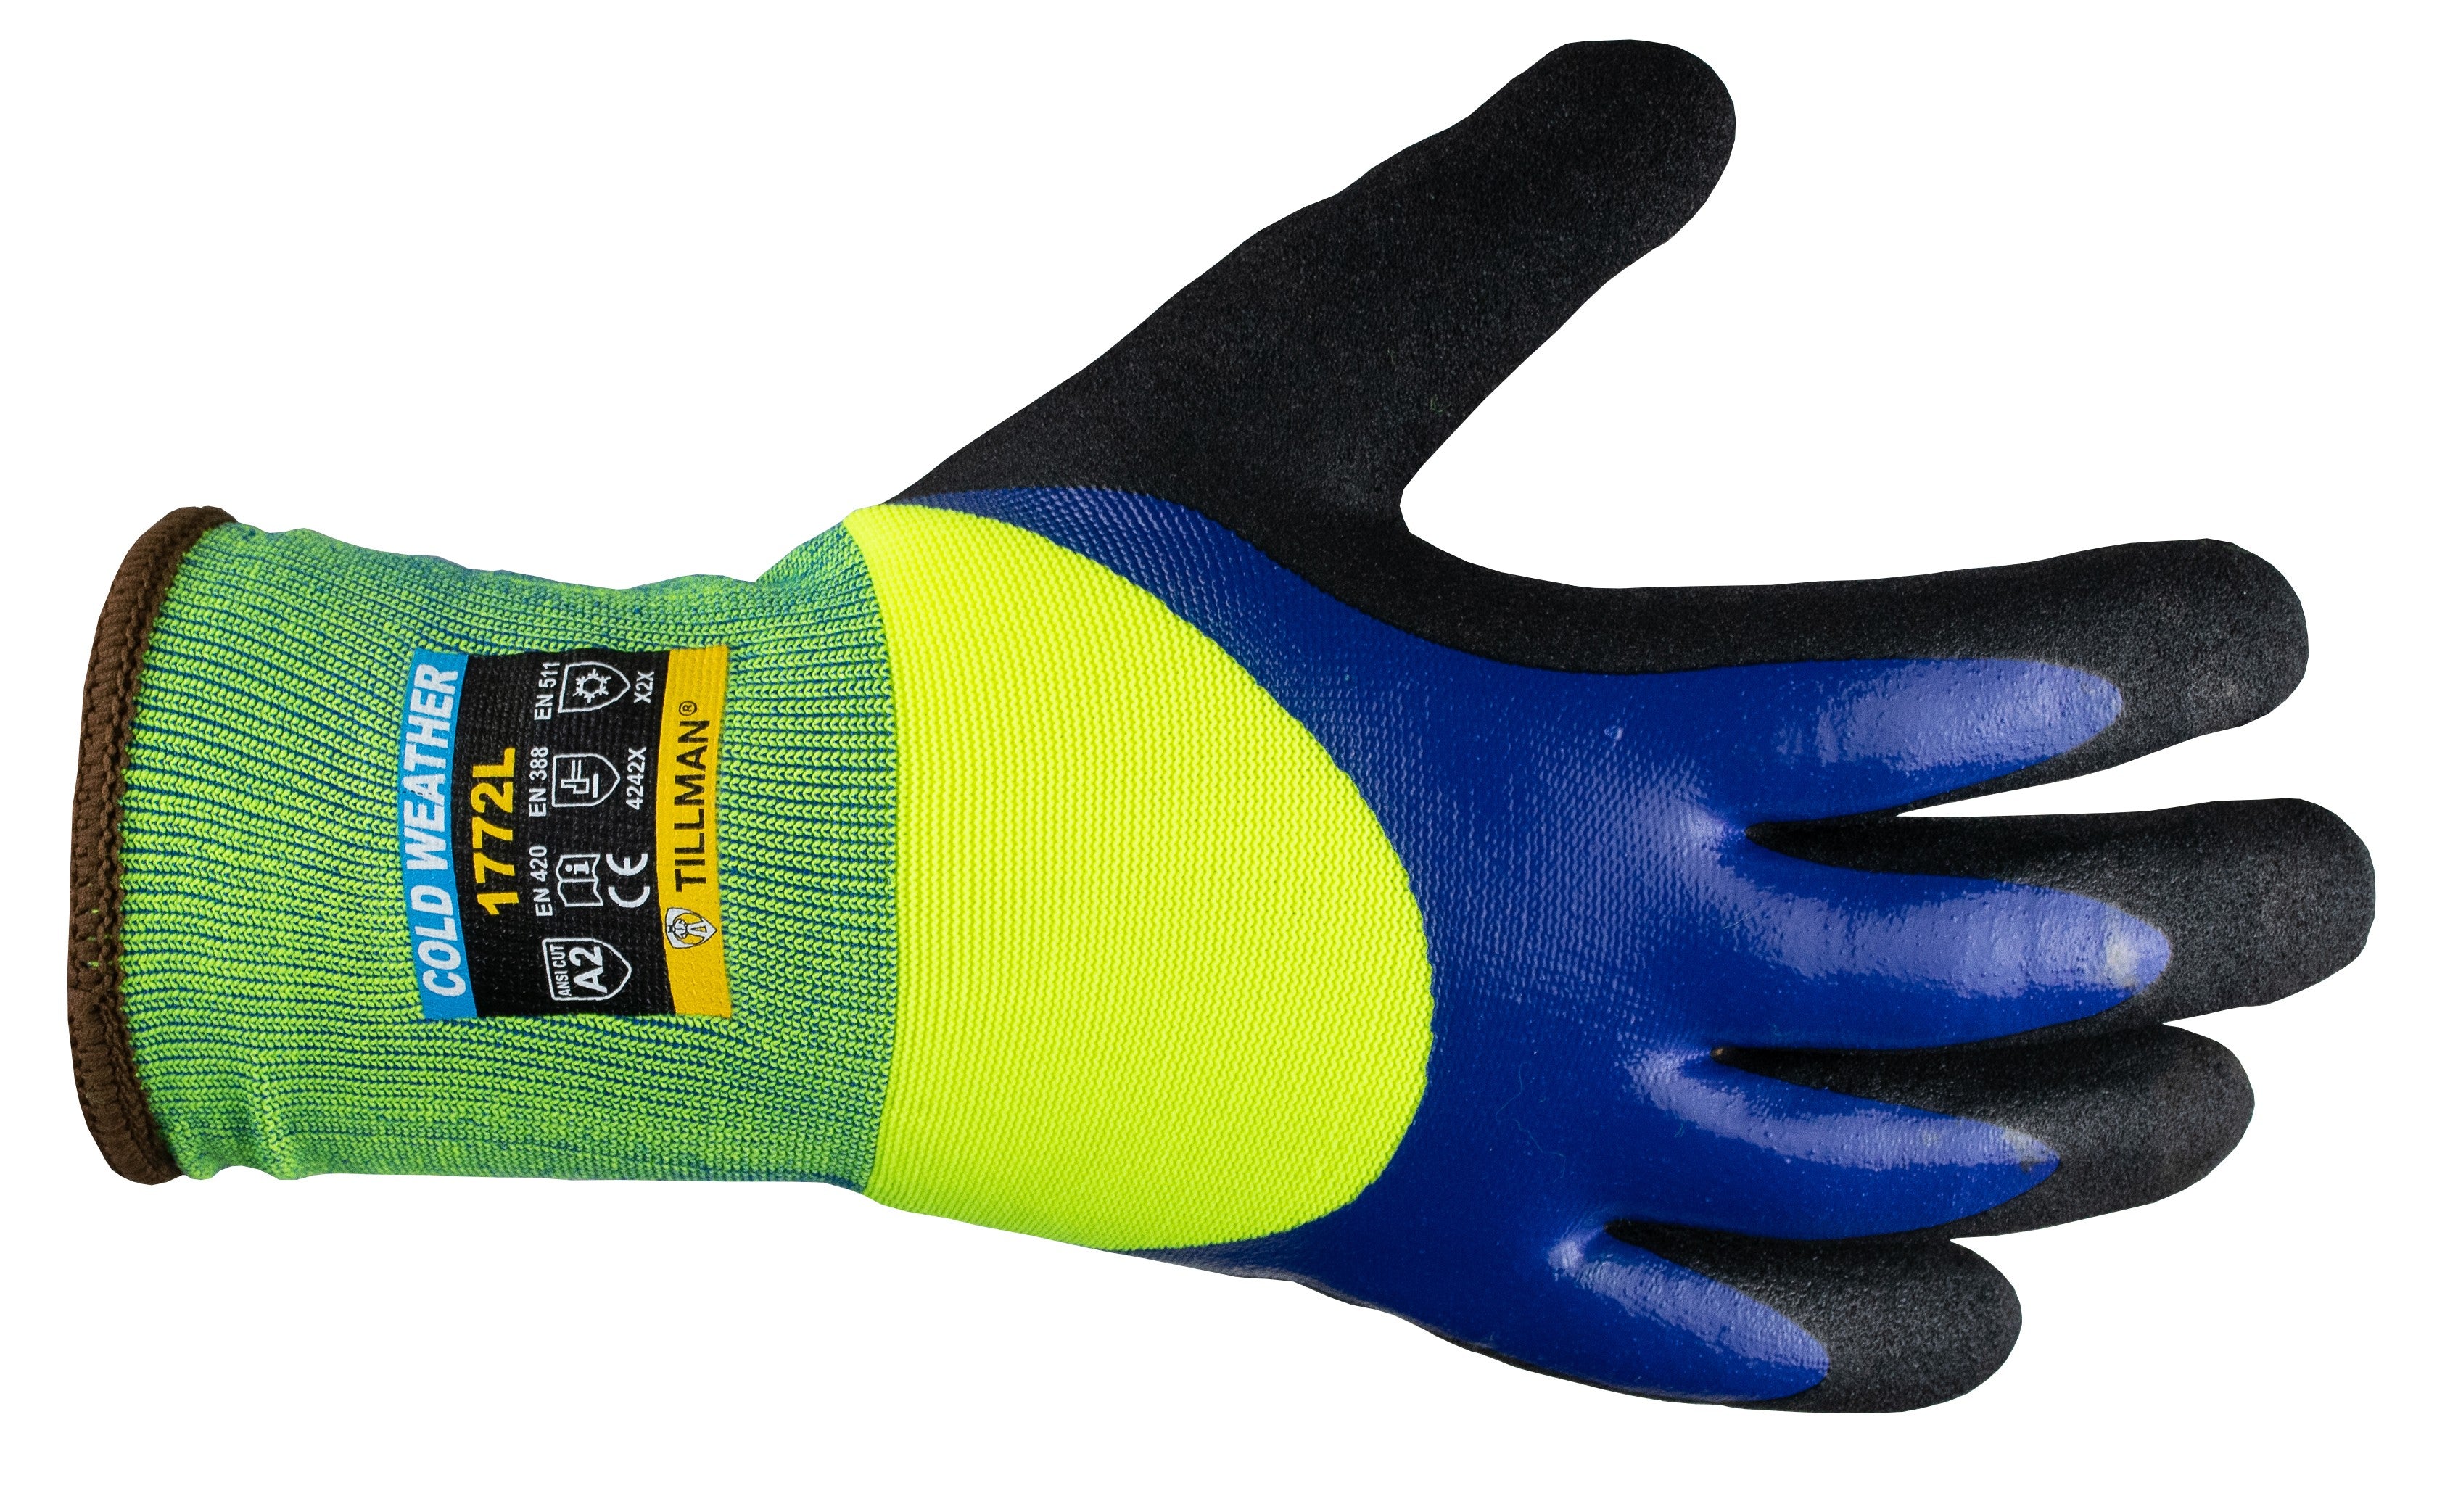 10 Pairs Dot Palm Multi Work Gloves Nylon Nitrile Rubber Coated Glove (Blue)